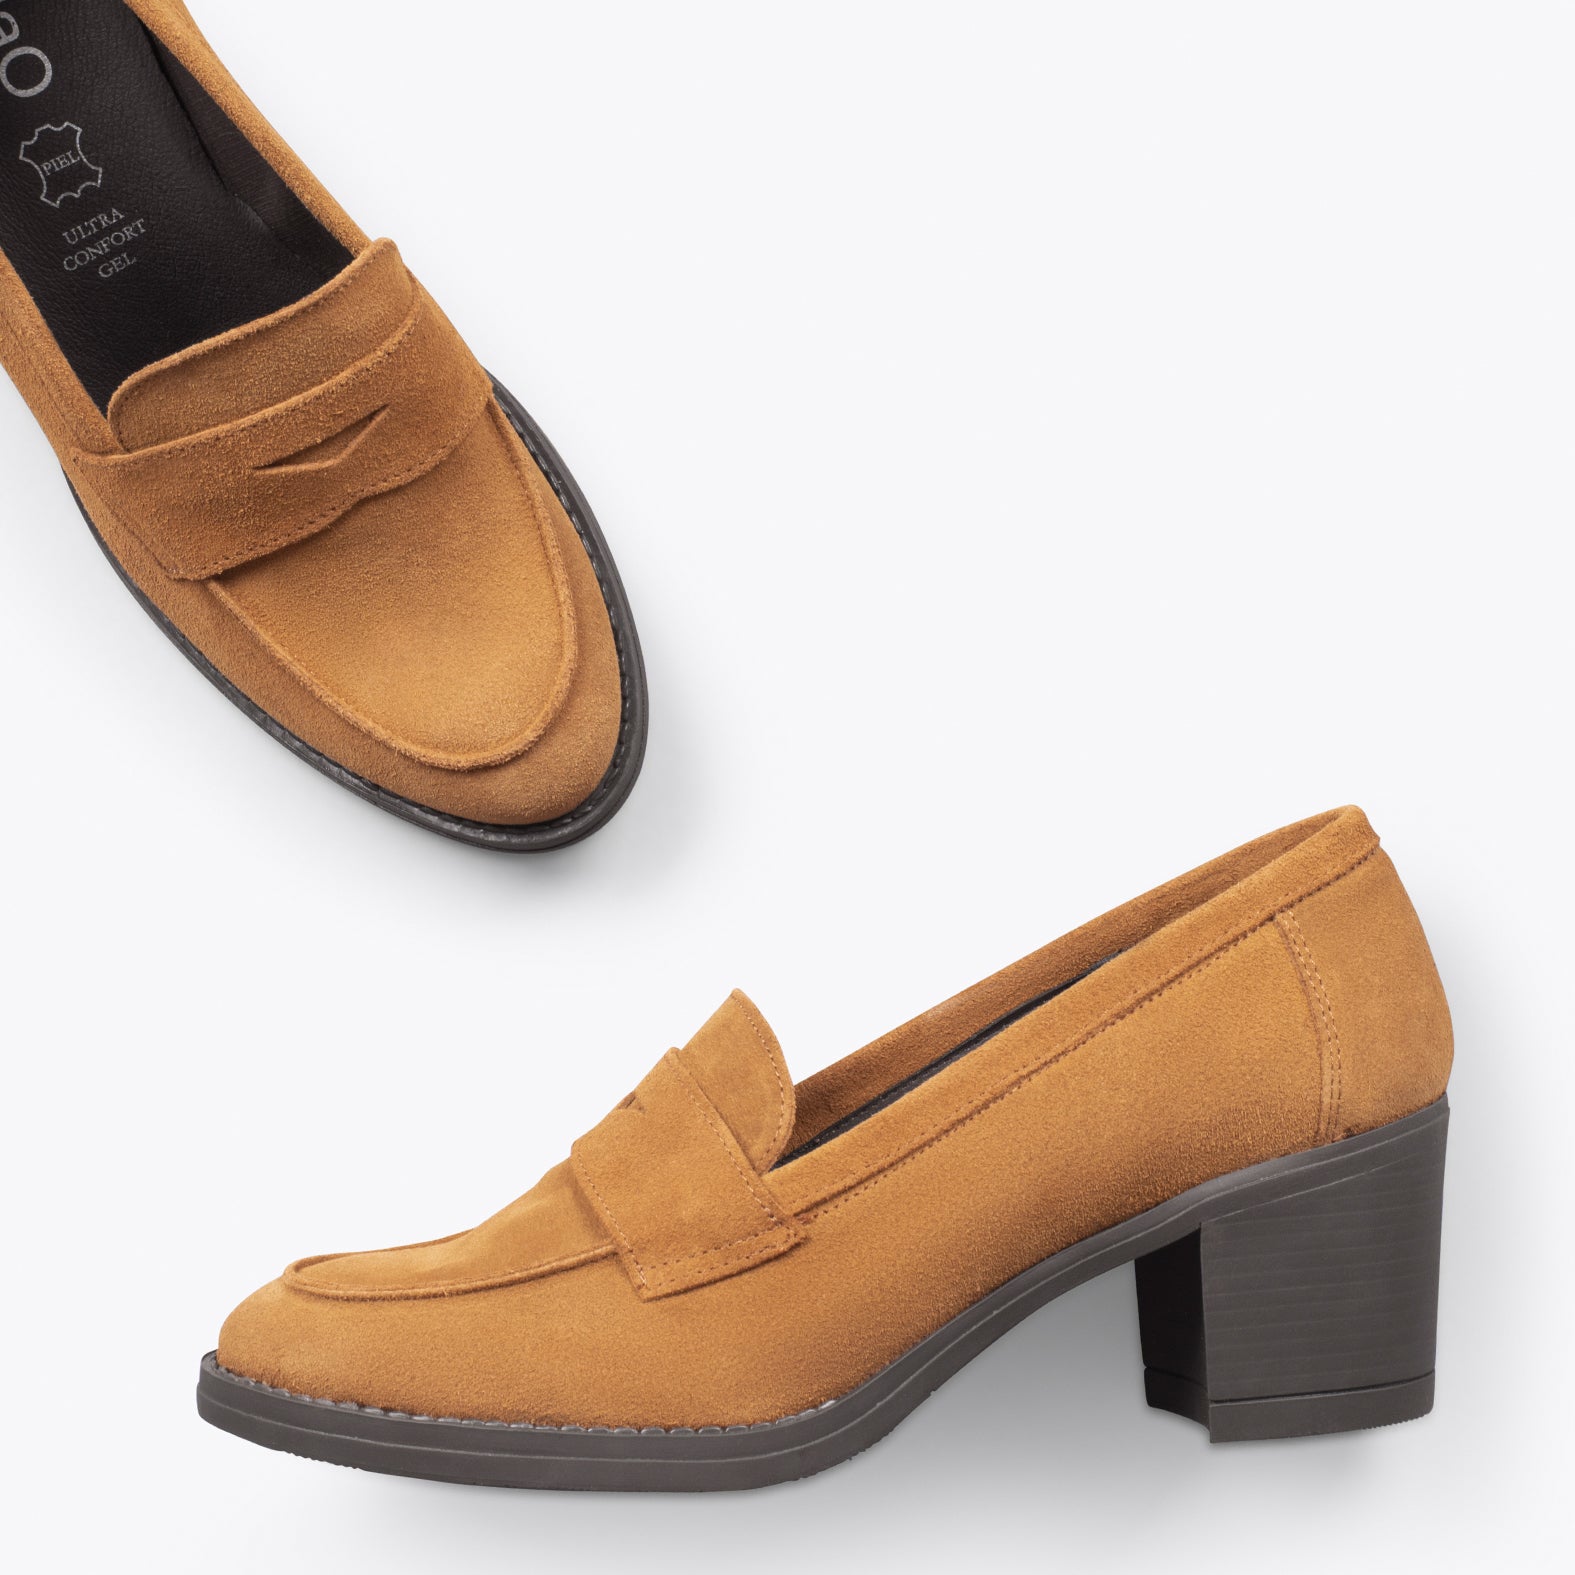 MOKKA – CAMEL suede leather mid heel moccasin